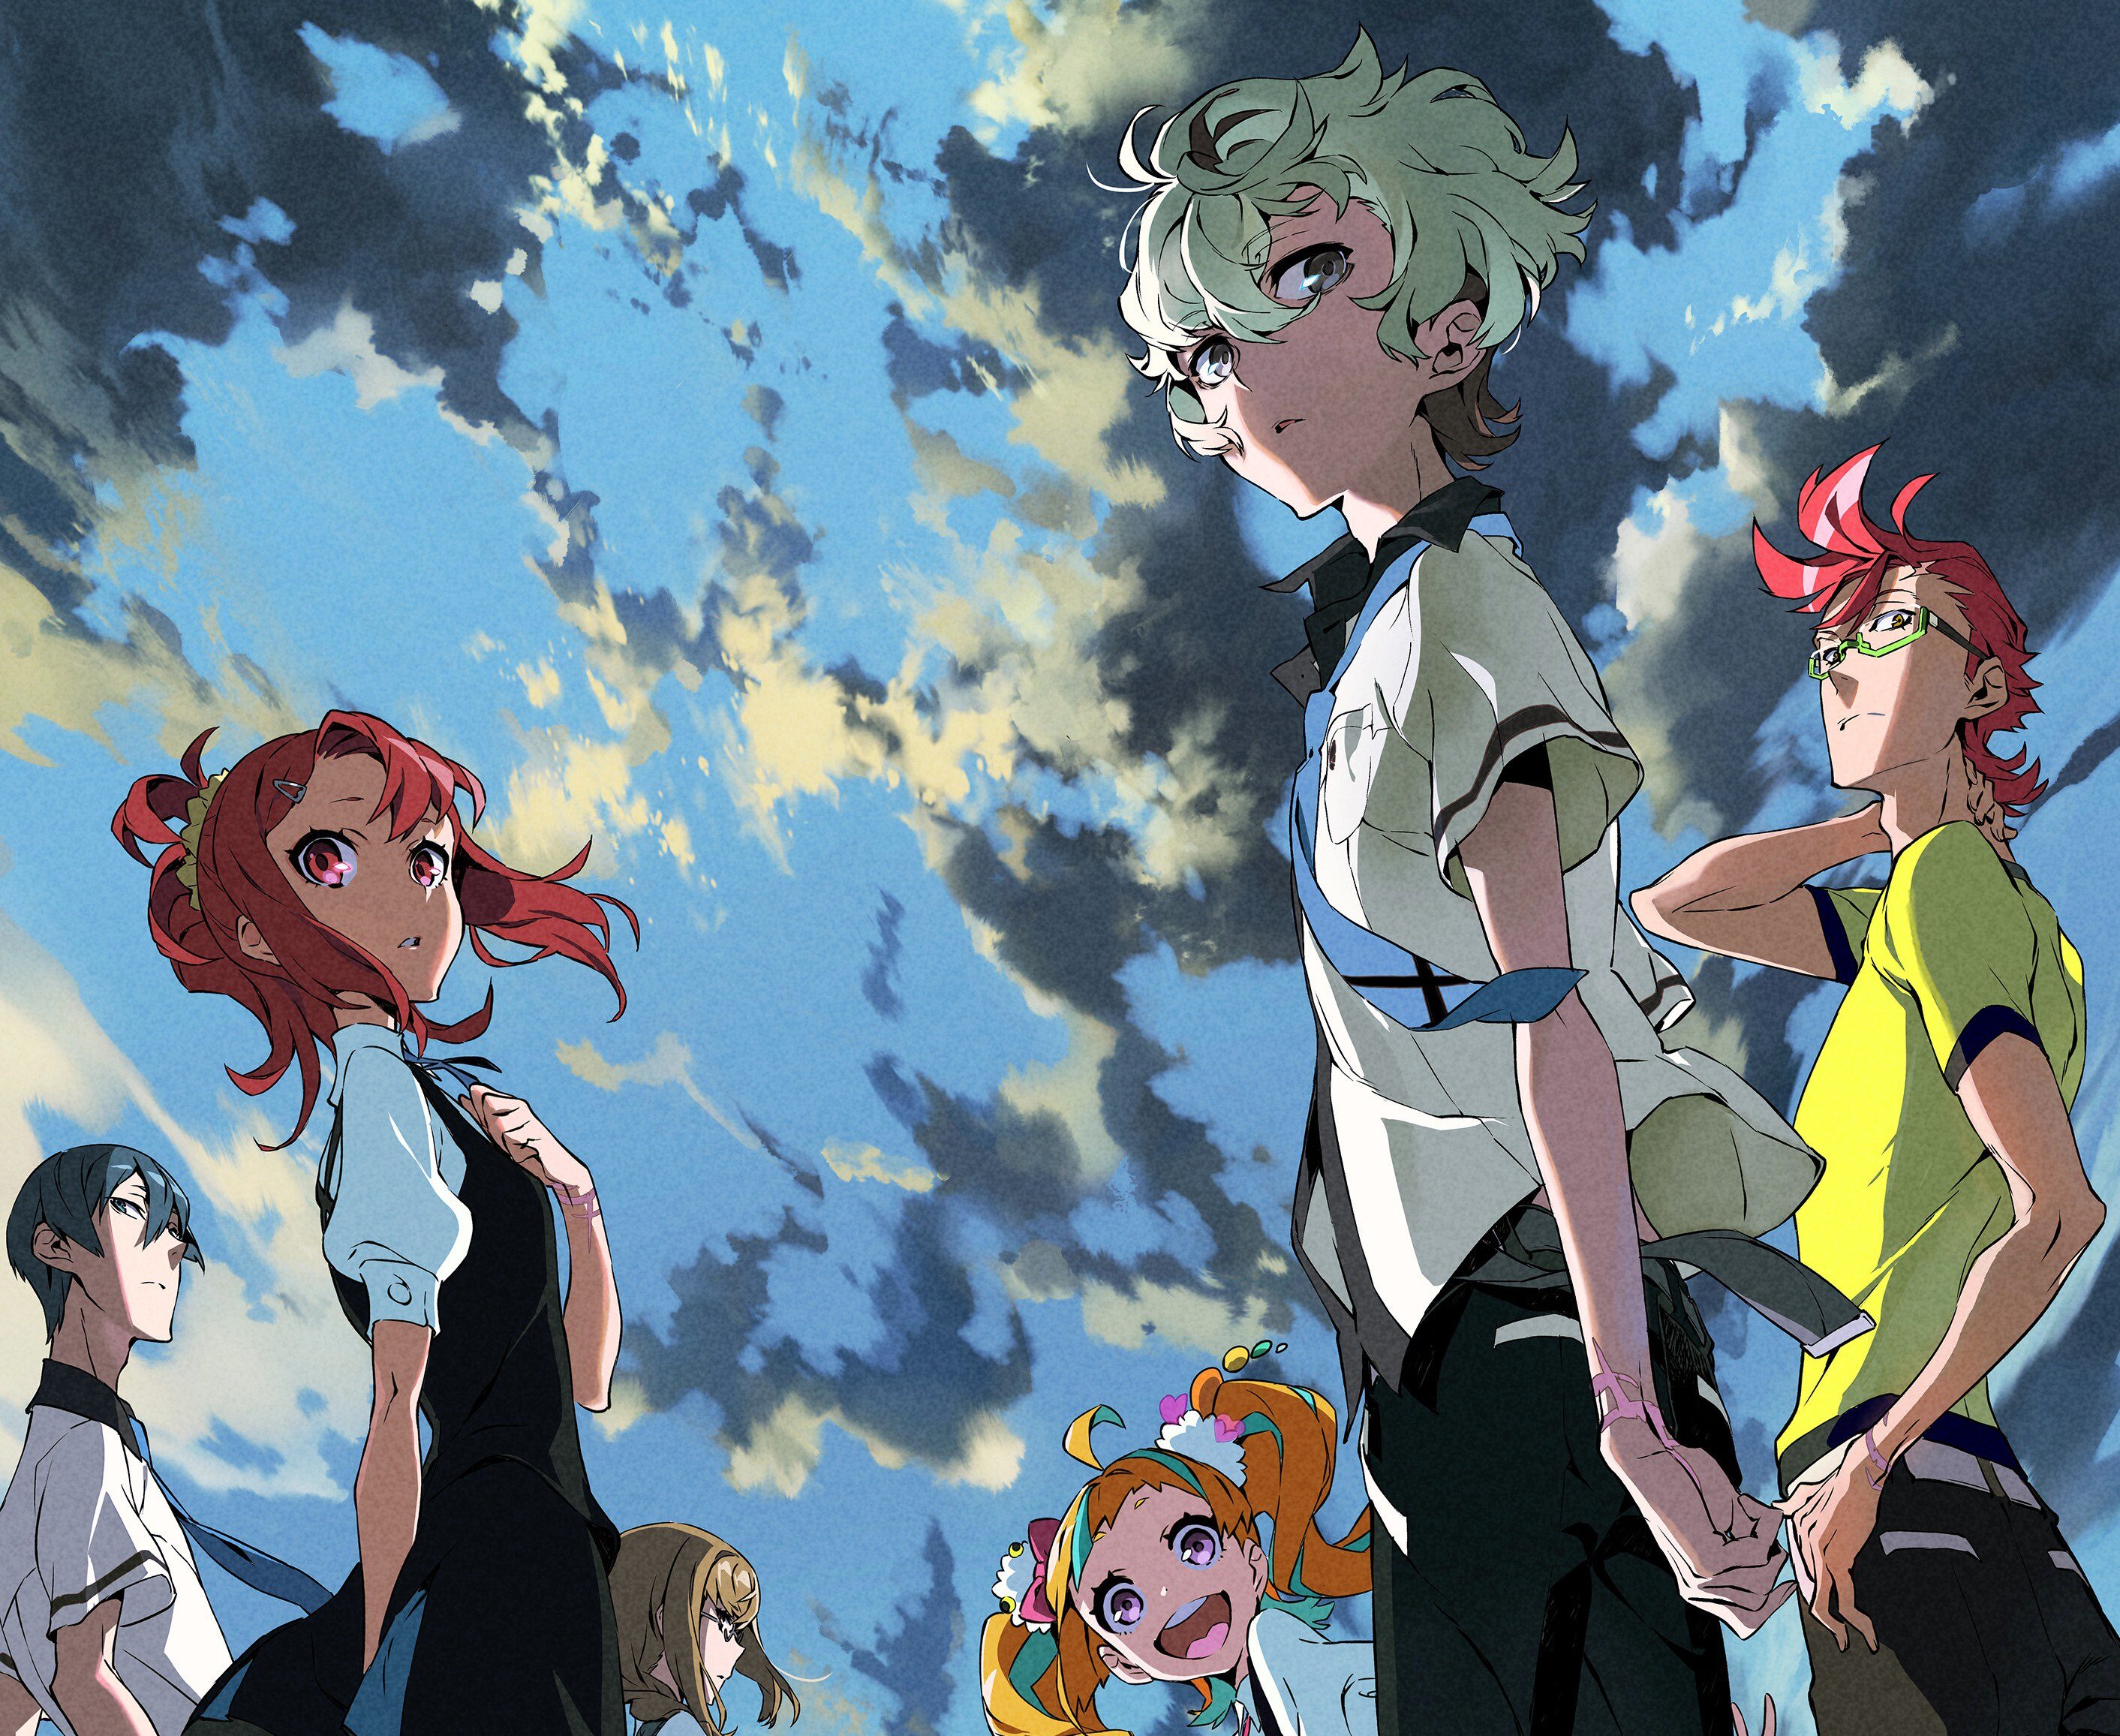 Trigger's Kiznaiver Anime Casts Yuuki Kaji, Hibiku Yamamura - News - Anime  News Network